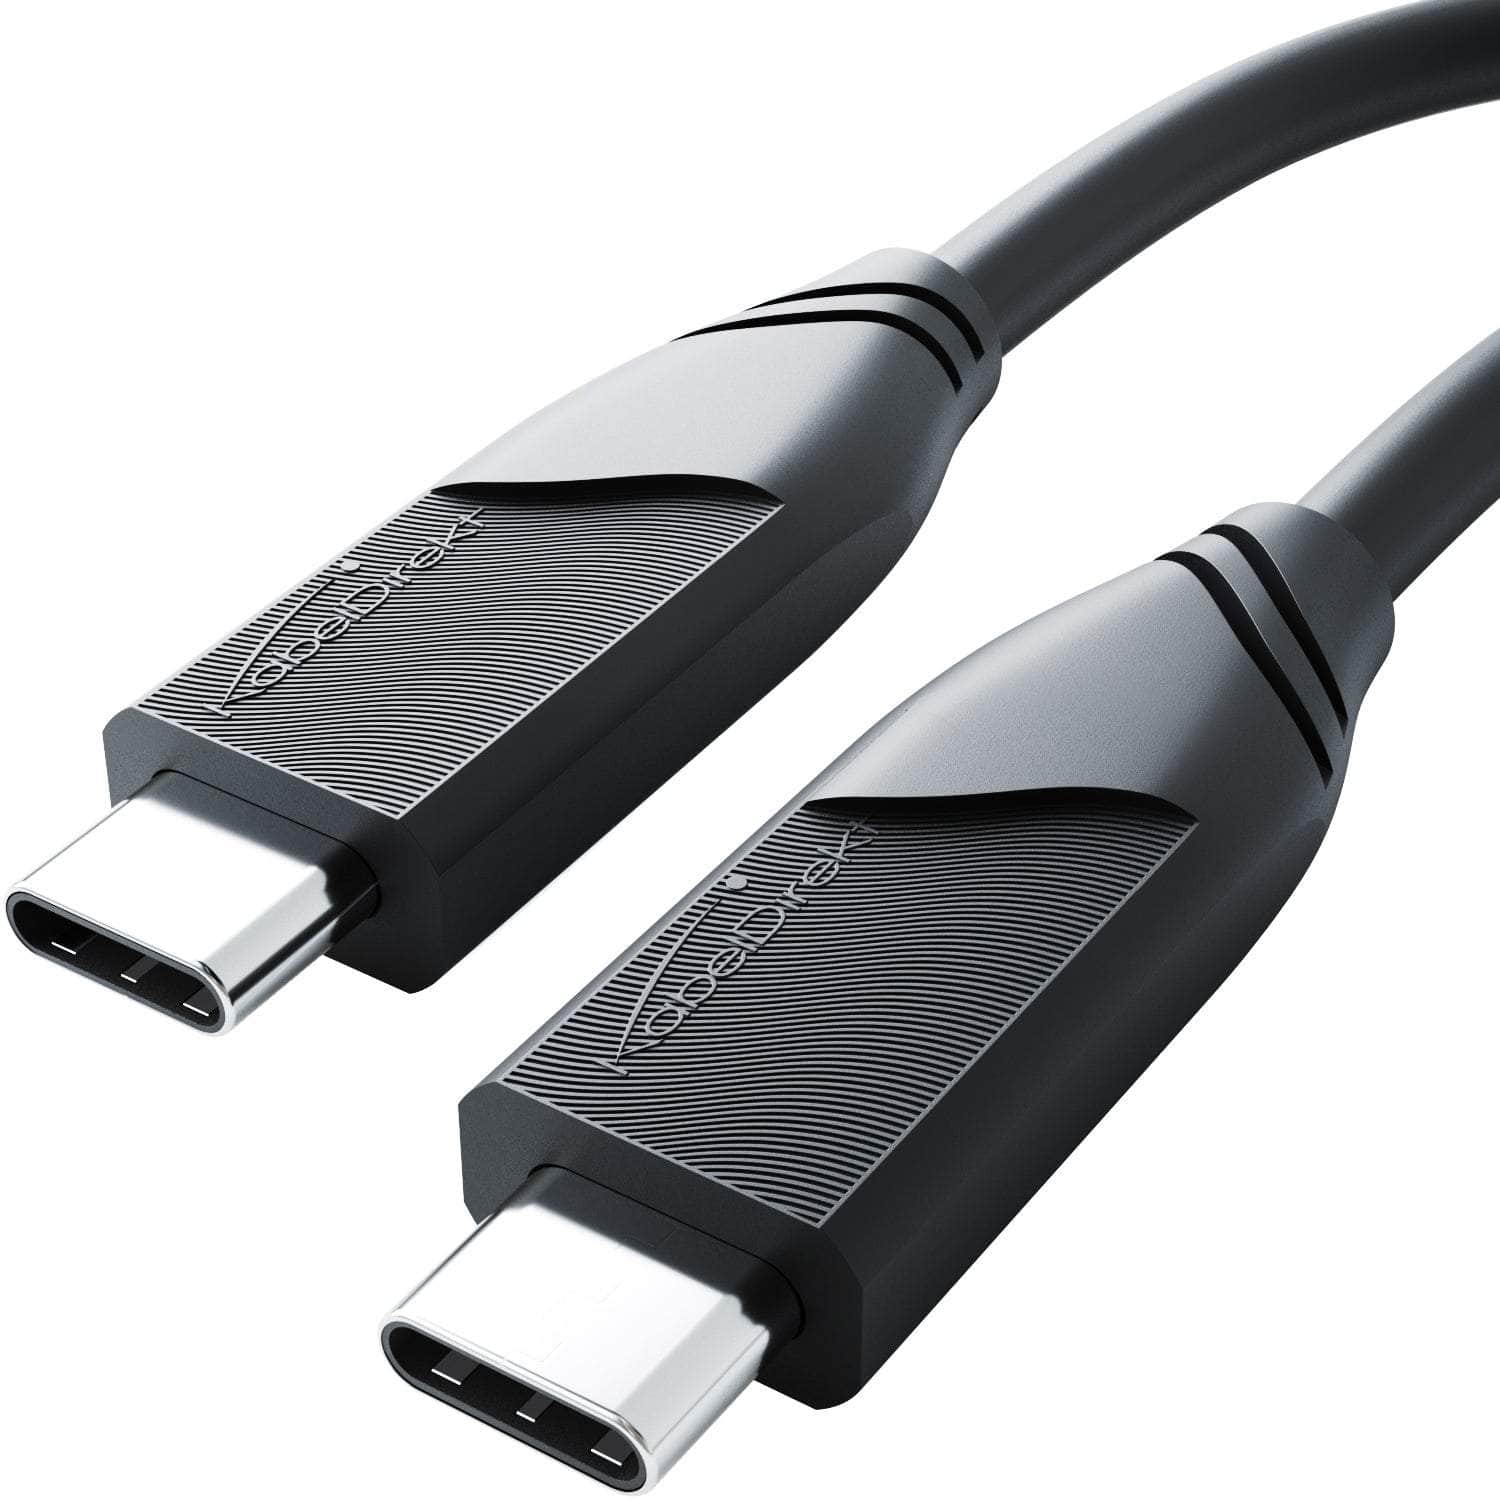 USB C Cable - USB 4.0, Power Delivery 3, Thunderbolt 4, black - 2m –  KabelDirekt